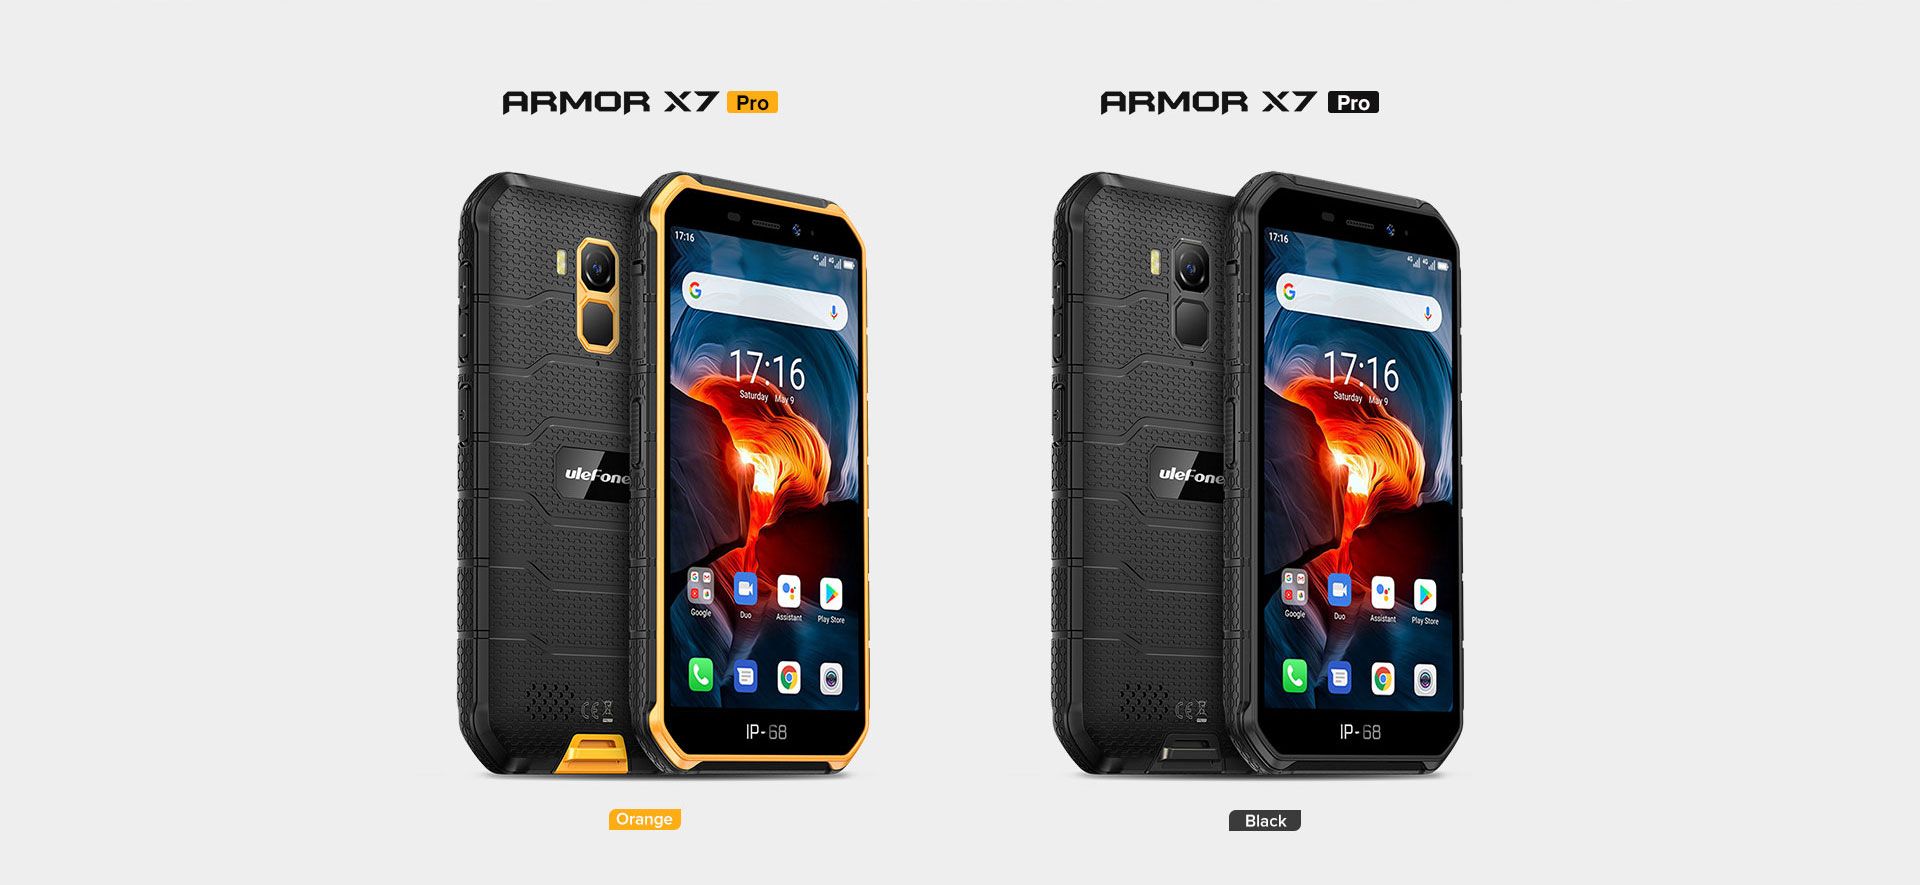 Ulefone Armor X7 ProI P68IP69K Smartphone With 5.0-inch HD Screen